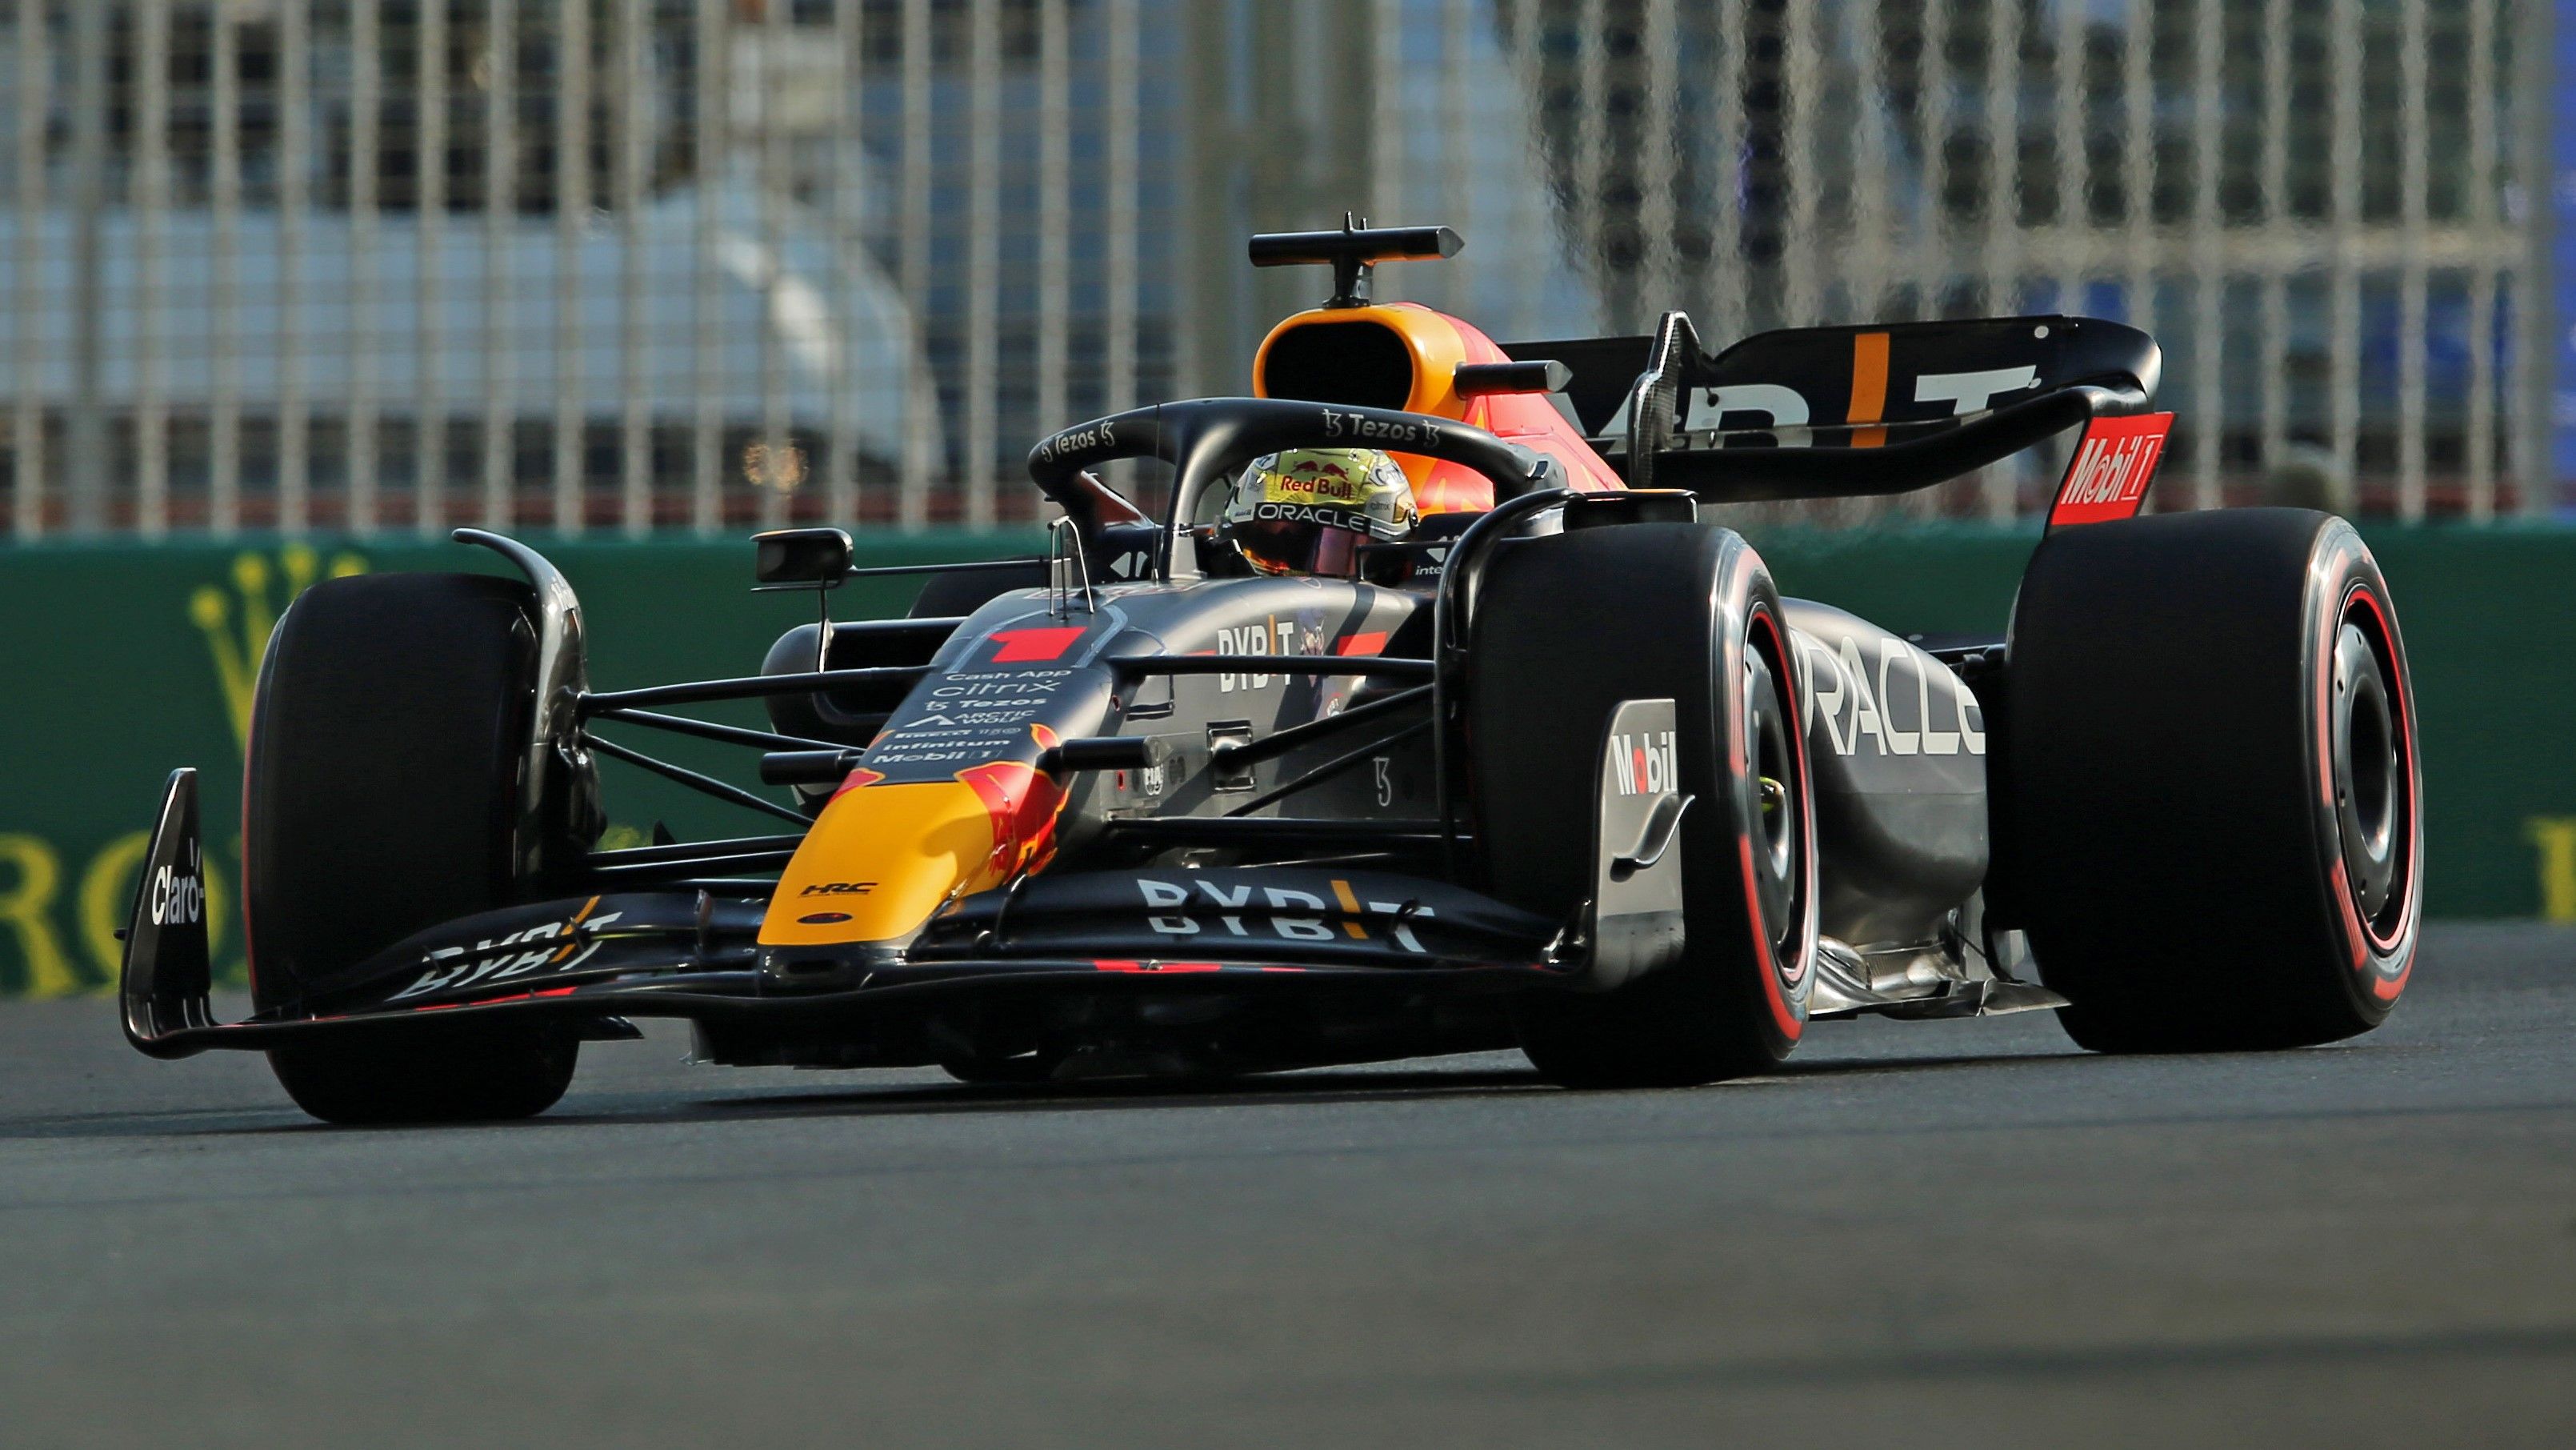 Max Verstappen leads F1 teammate Sergio Perez to Abu Dhabi Grand Prix pole position 